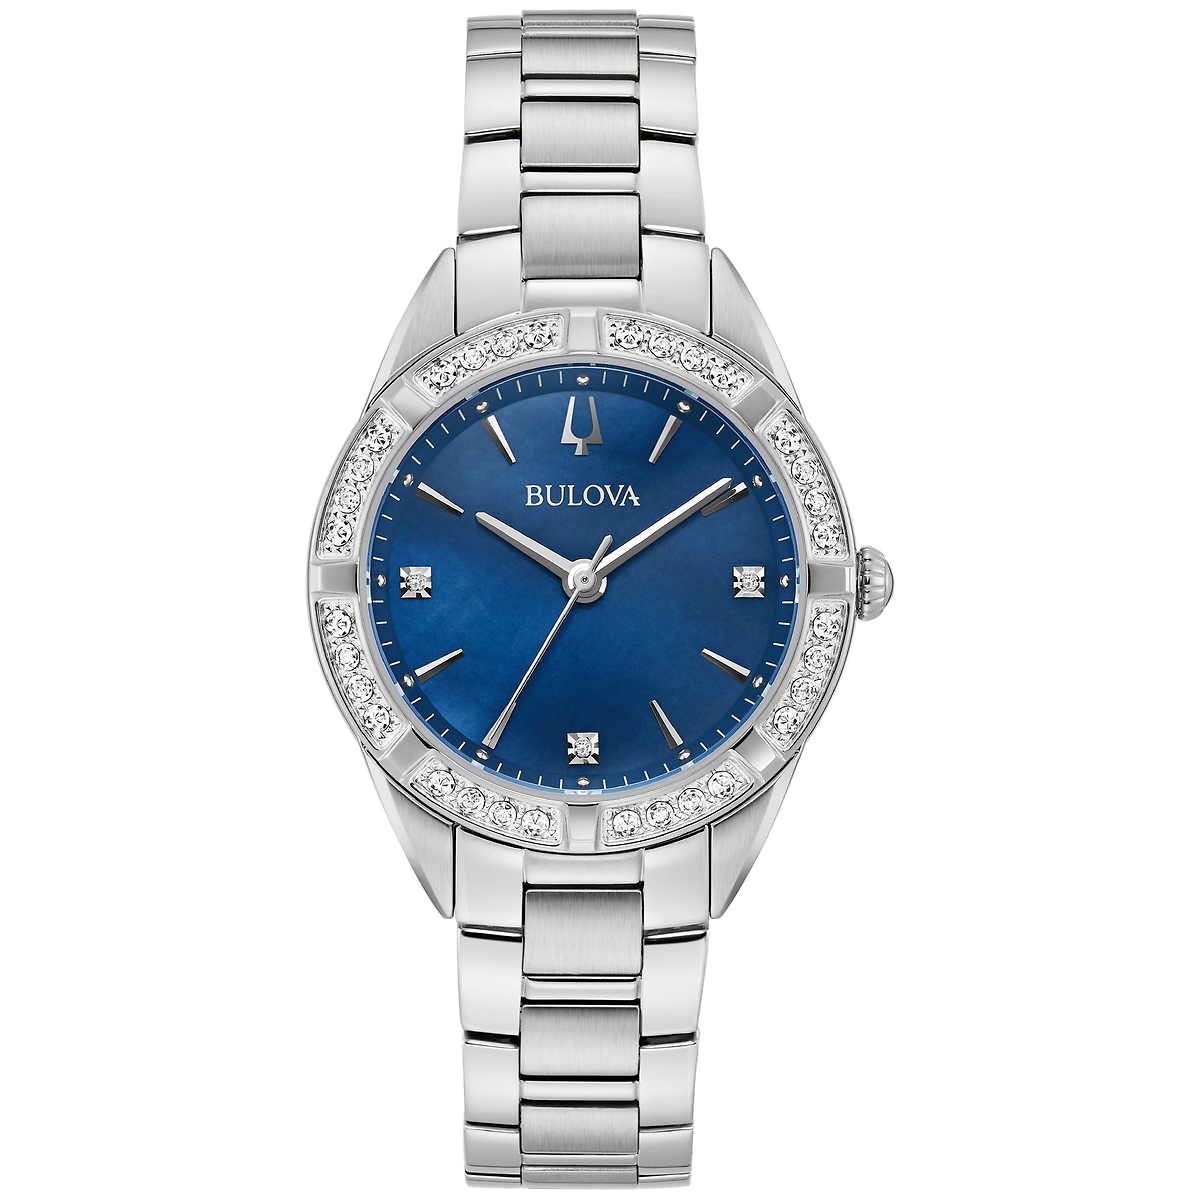 Bulova - Sutton Stainless Steel Ladies Quartz Watch - 96R243 - Dial: Blue, Band: Silver